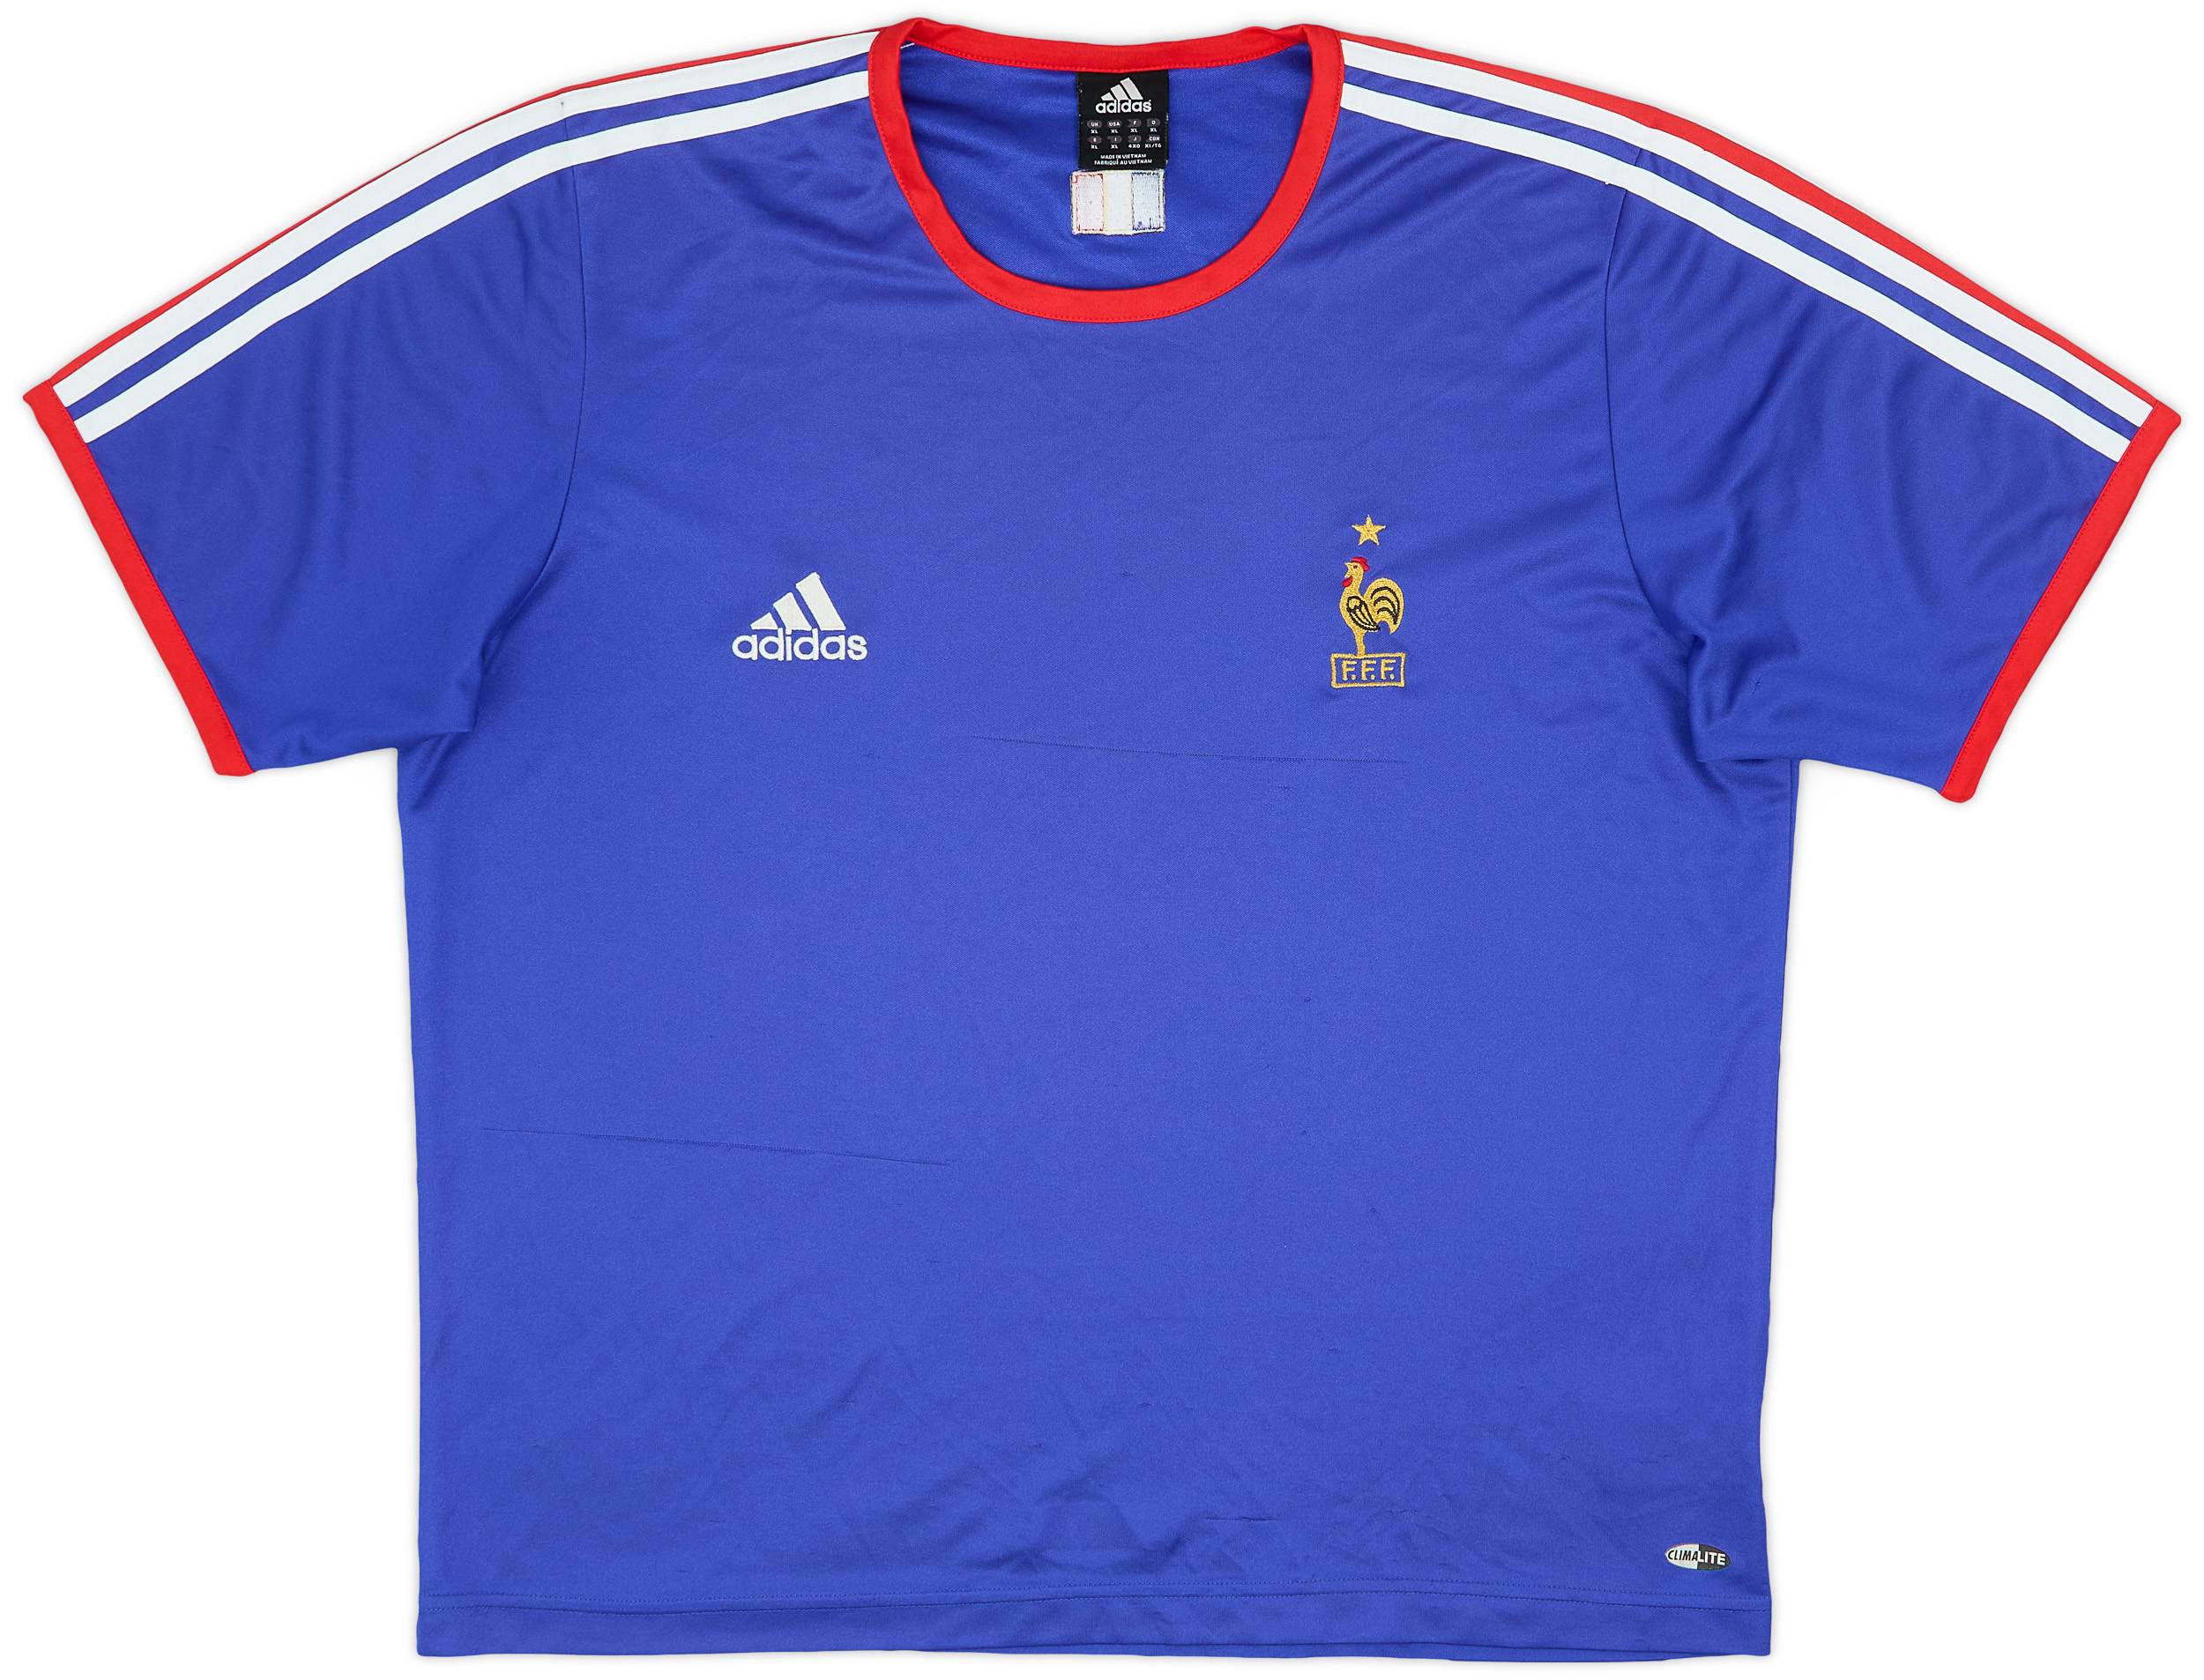 2004-06 France adidas Training Shirt - 7/10 - (XL)